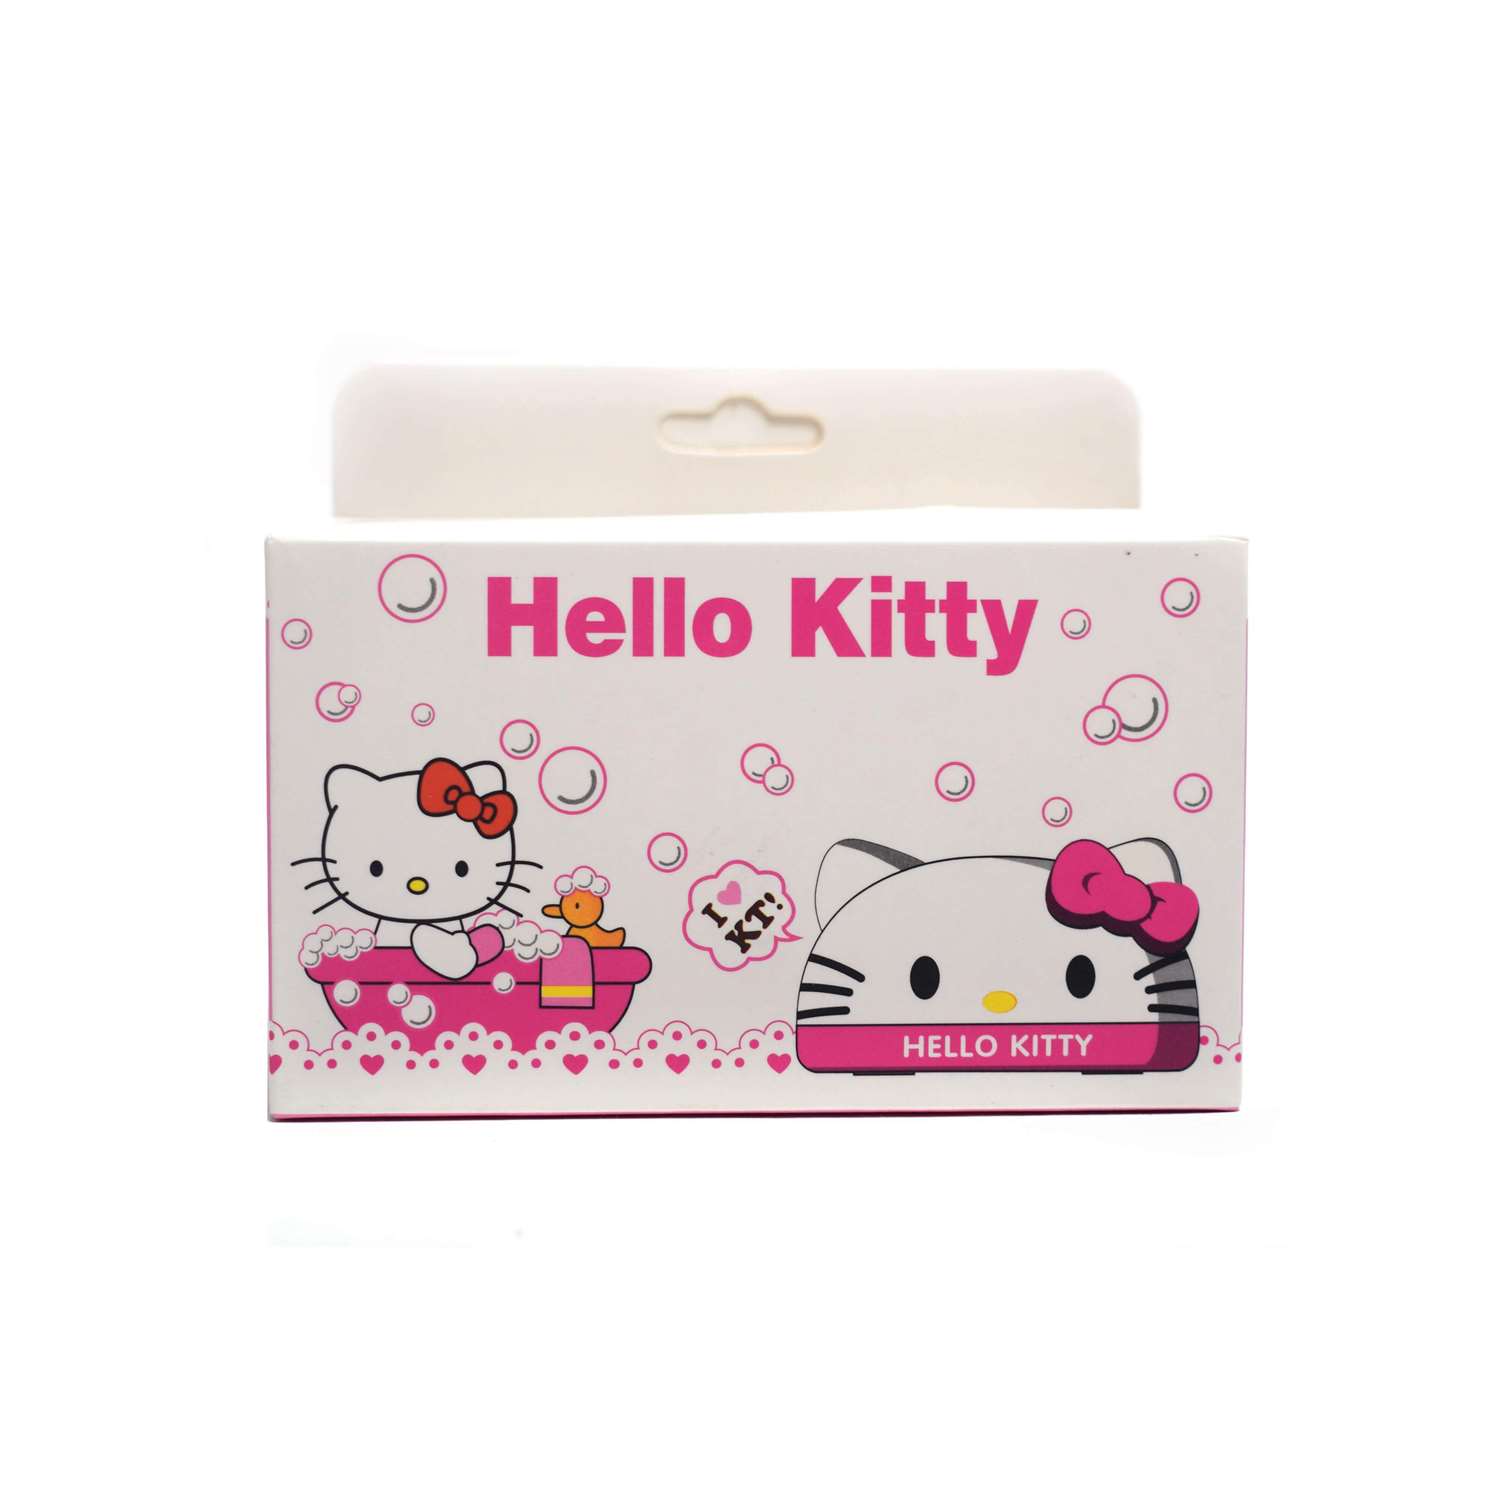 HELLO KITTY Soap Box - White, Pink